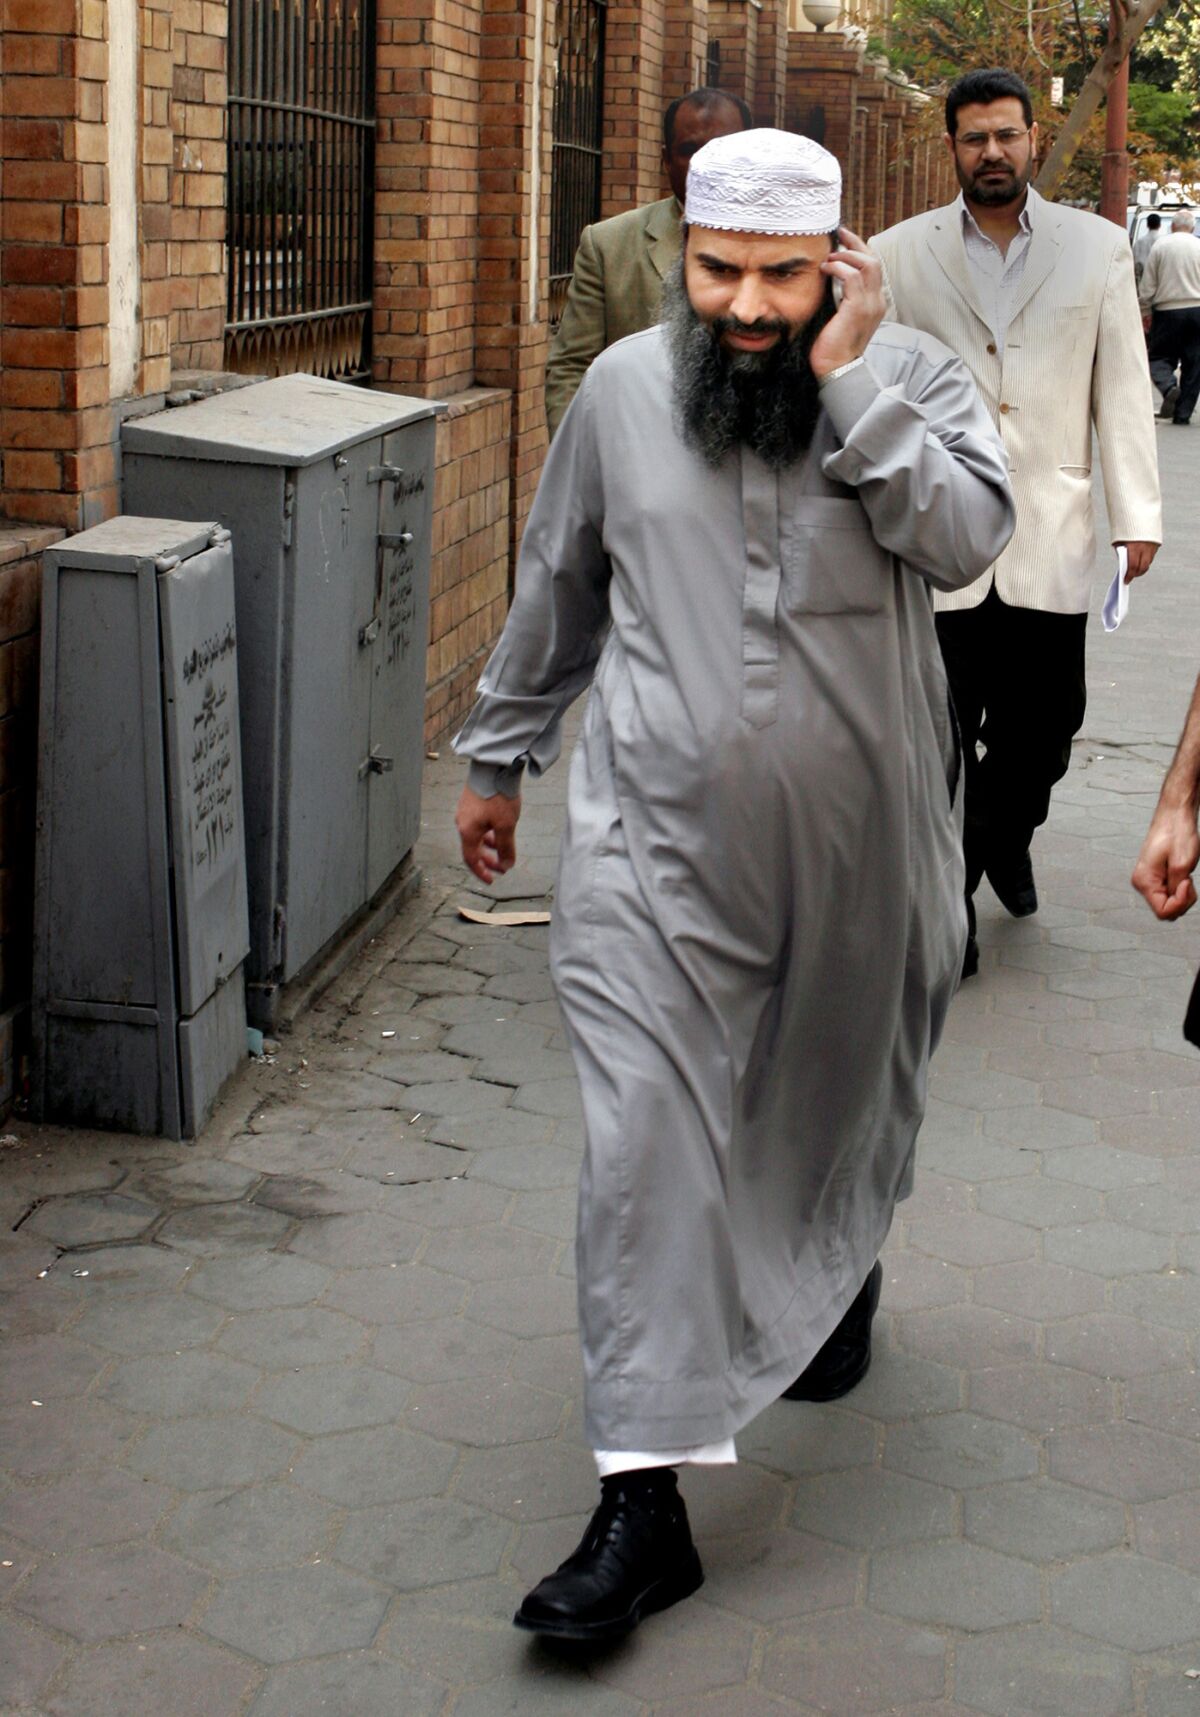 Egyptian cleric Hassan Mustafa Osama Nasr, also known as Abu Omar, walks down a Cairo street on April 11, 2007.